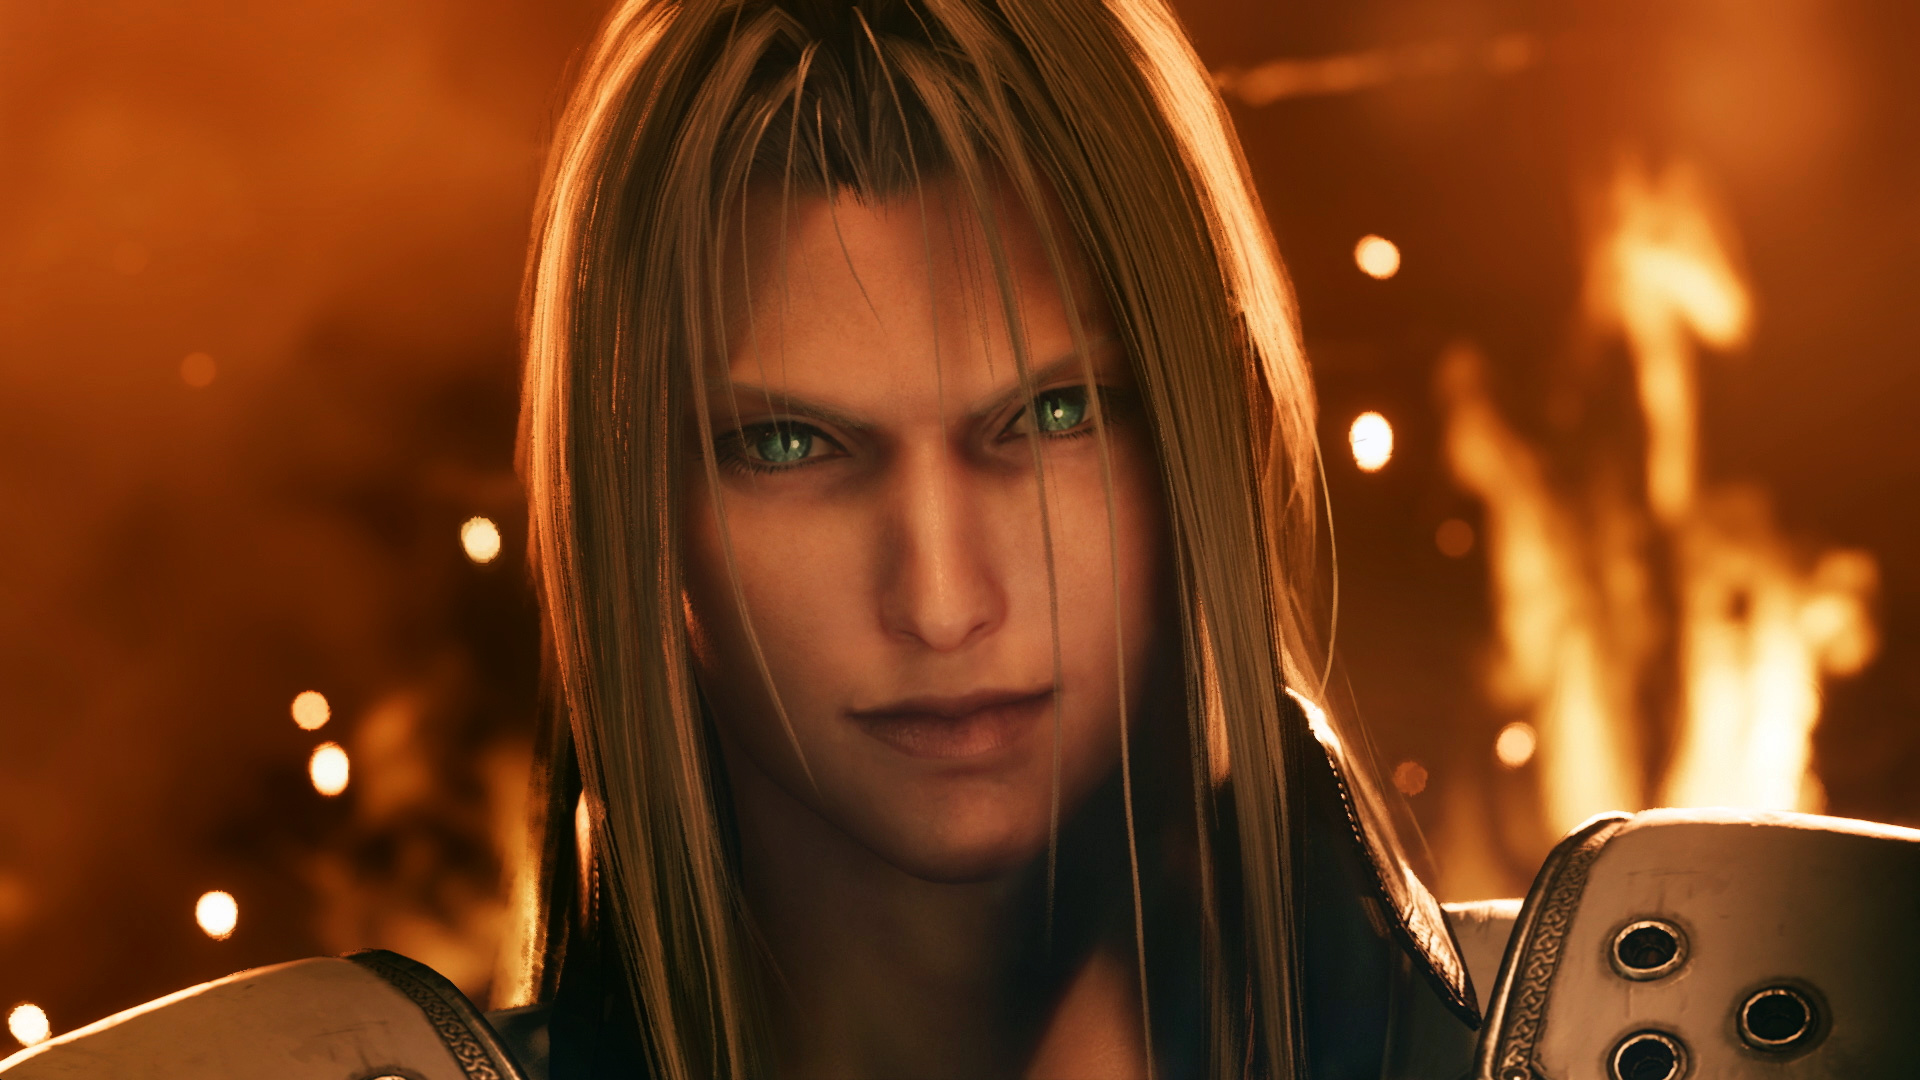 Final Fantasy VII Remake (for PlayStation 4) Review